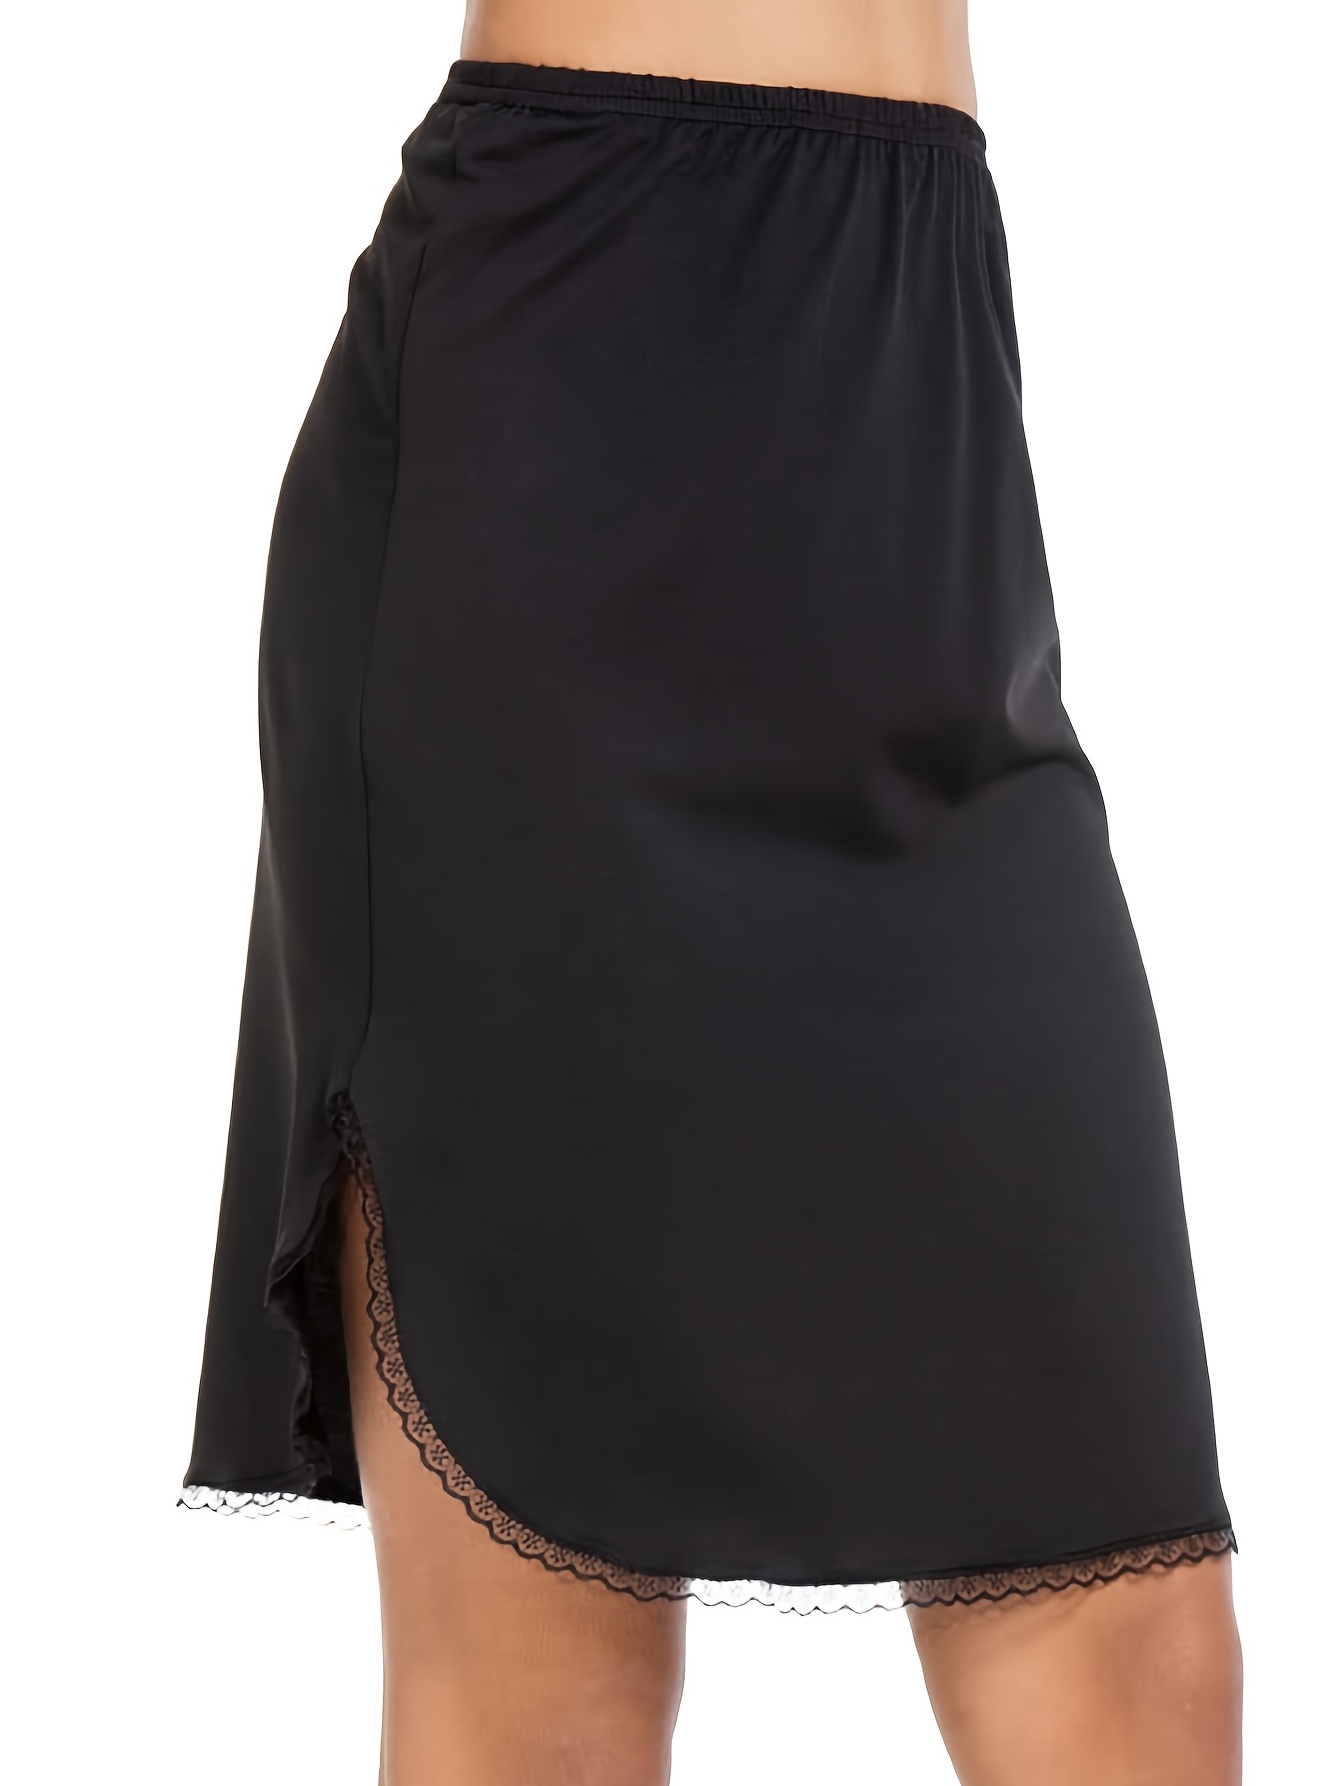 Foral Lace Trim Solid Skirt Side Split Stretch Half Slips Petticoat ...